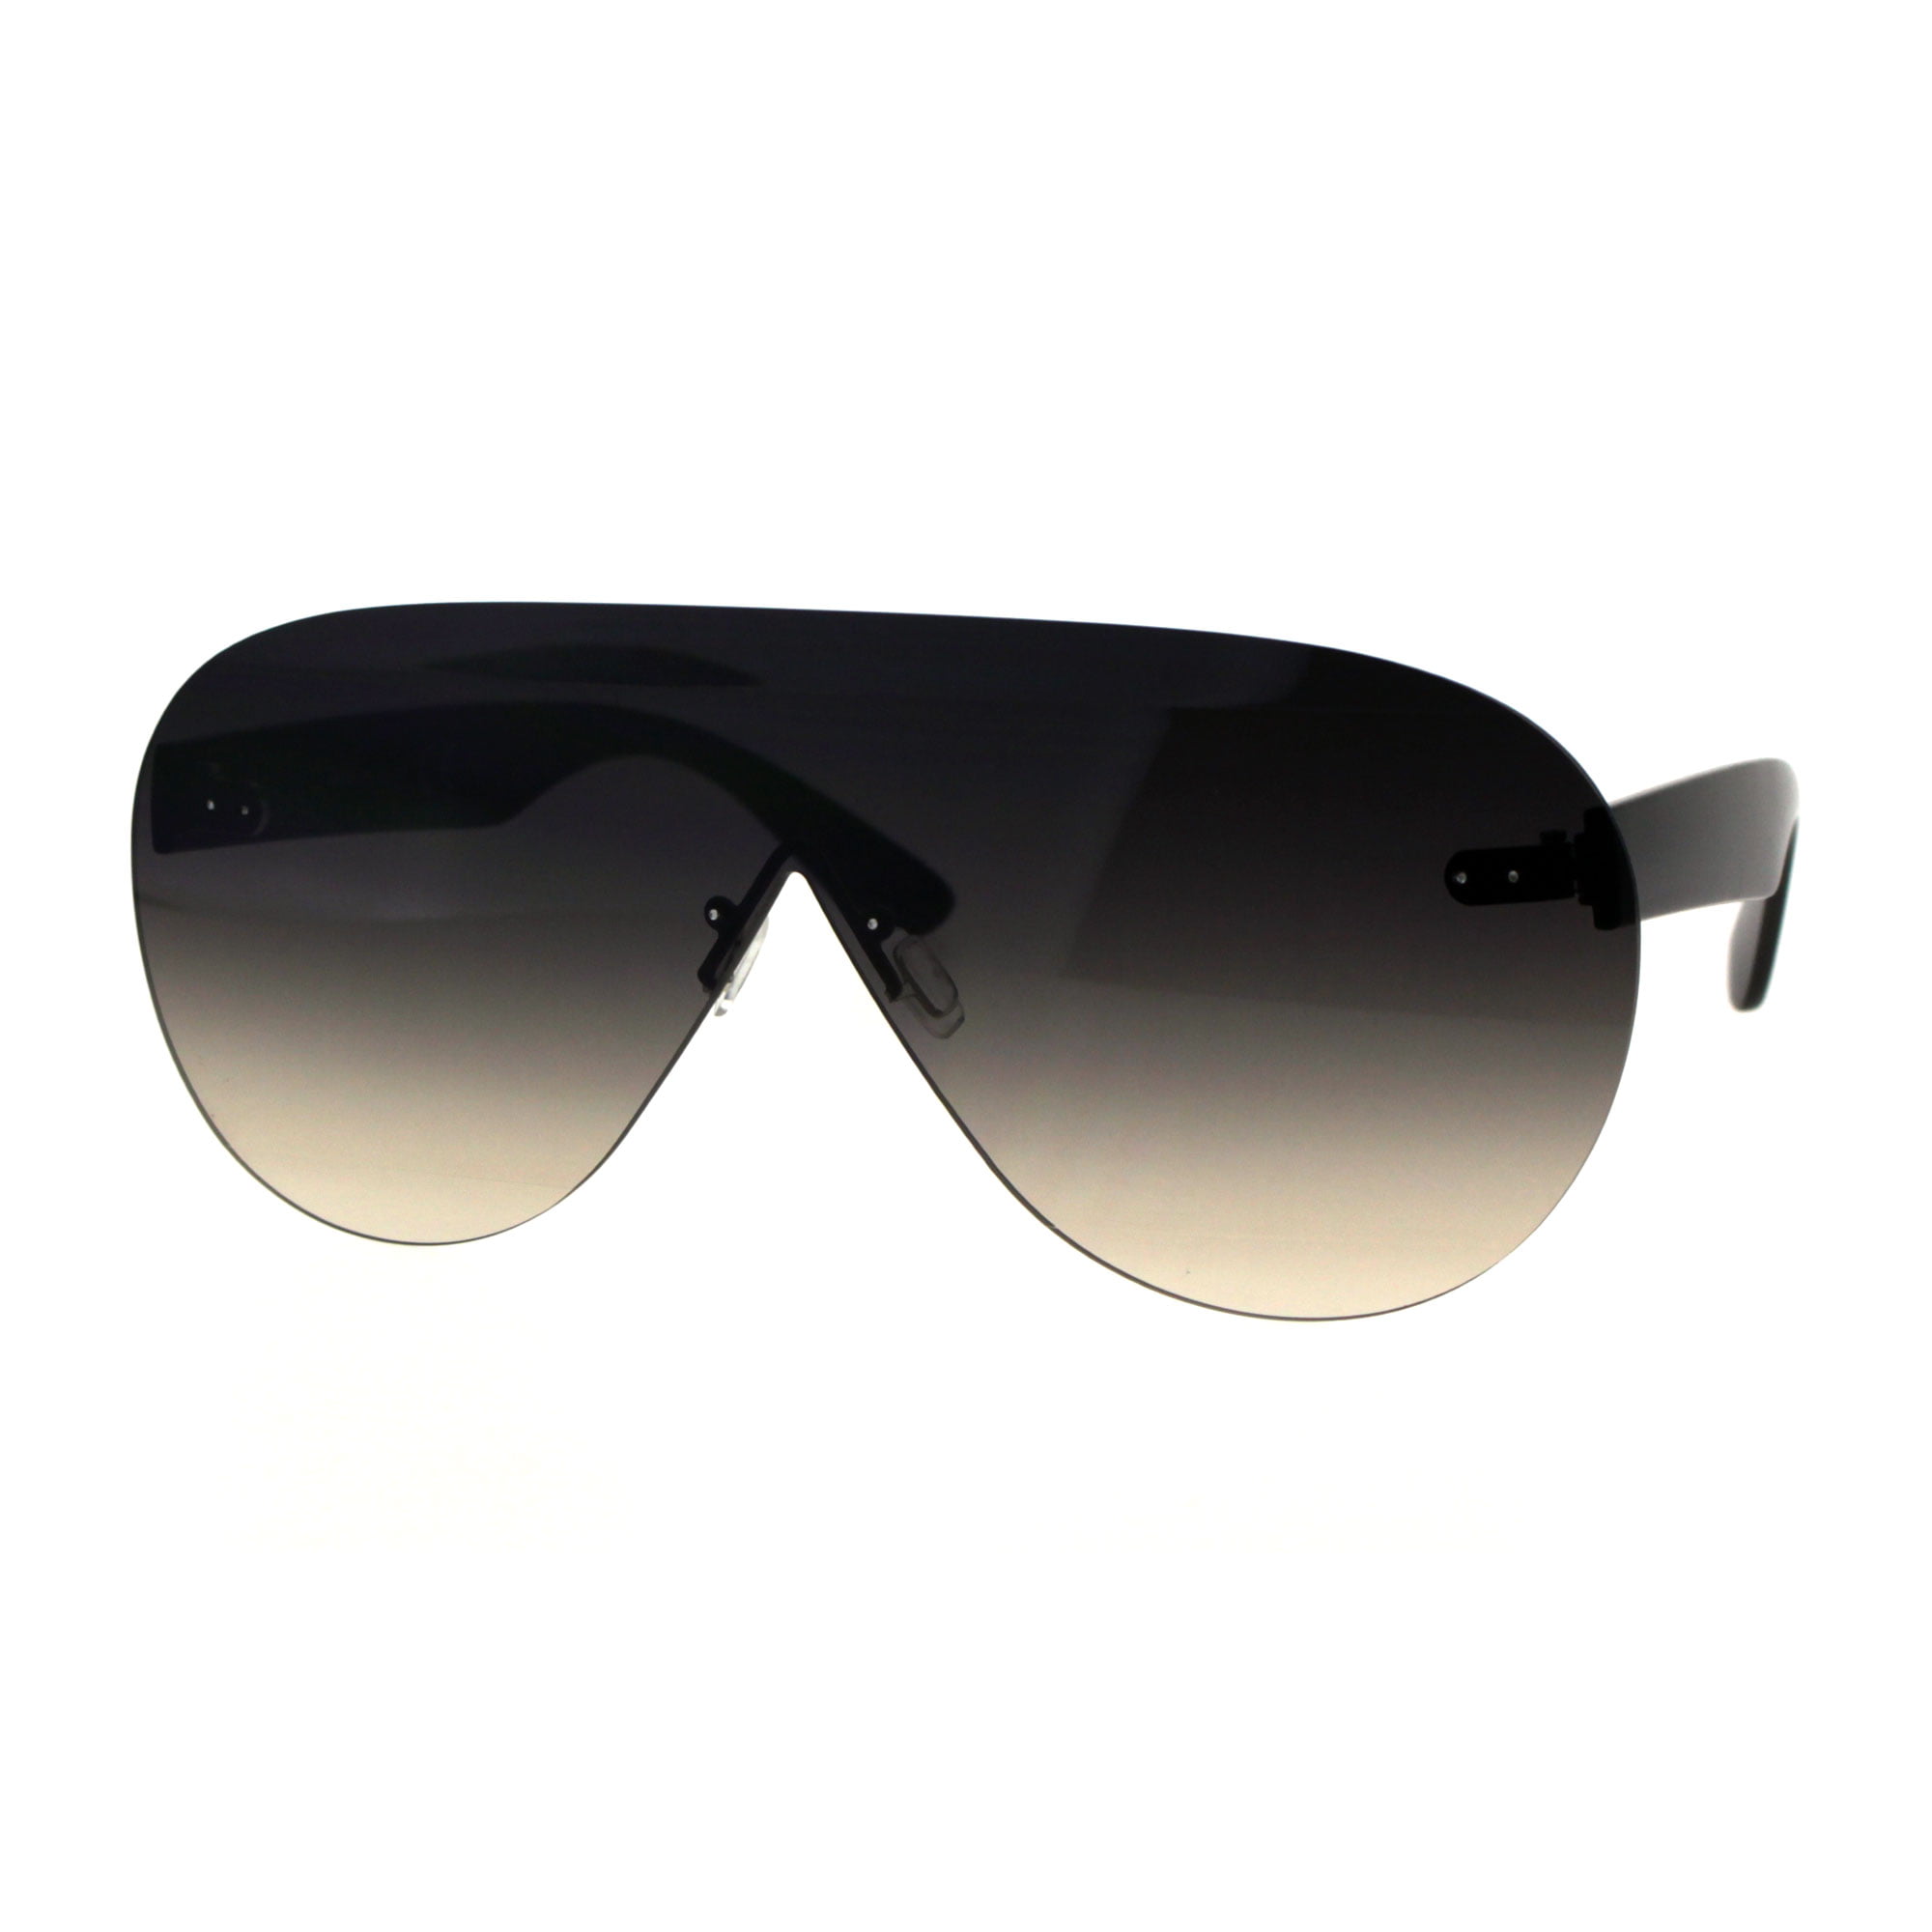 Mens Sunglasses KUSH Aviator Google Shield Sport Futuristic Casual Single Lens 